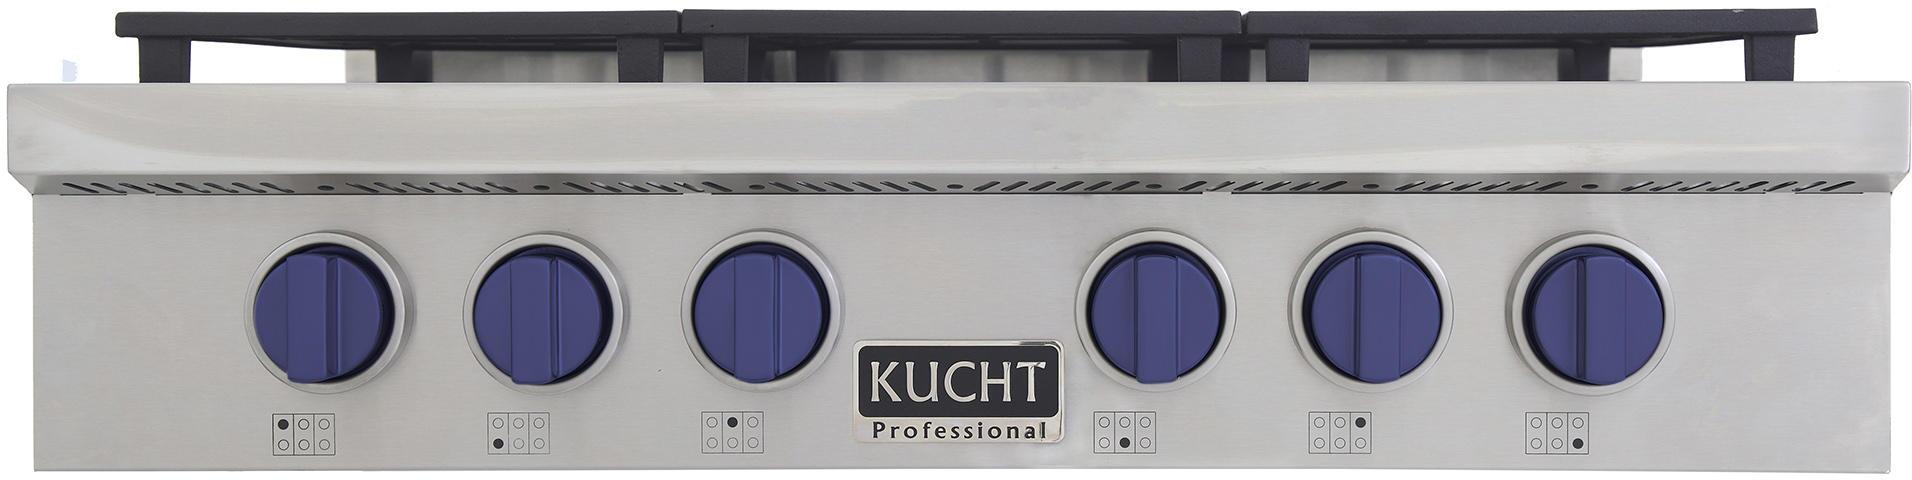 KUCHT 36 Inch Gas Sealed Burner Rangetop - KFX369T - B - Farmhouse Kitchen and Bath